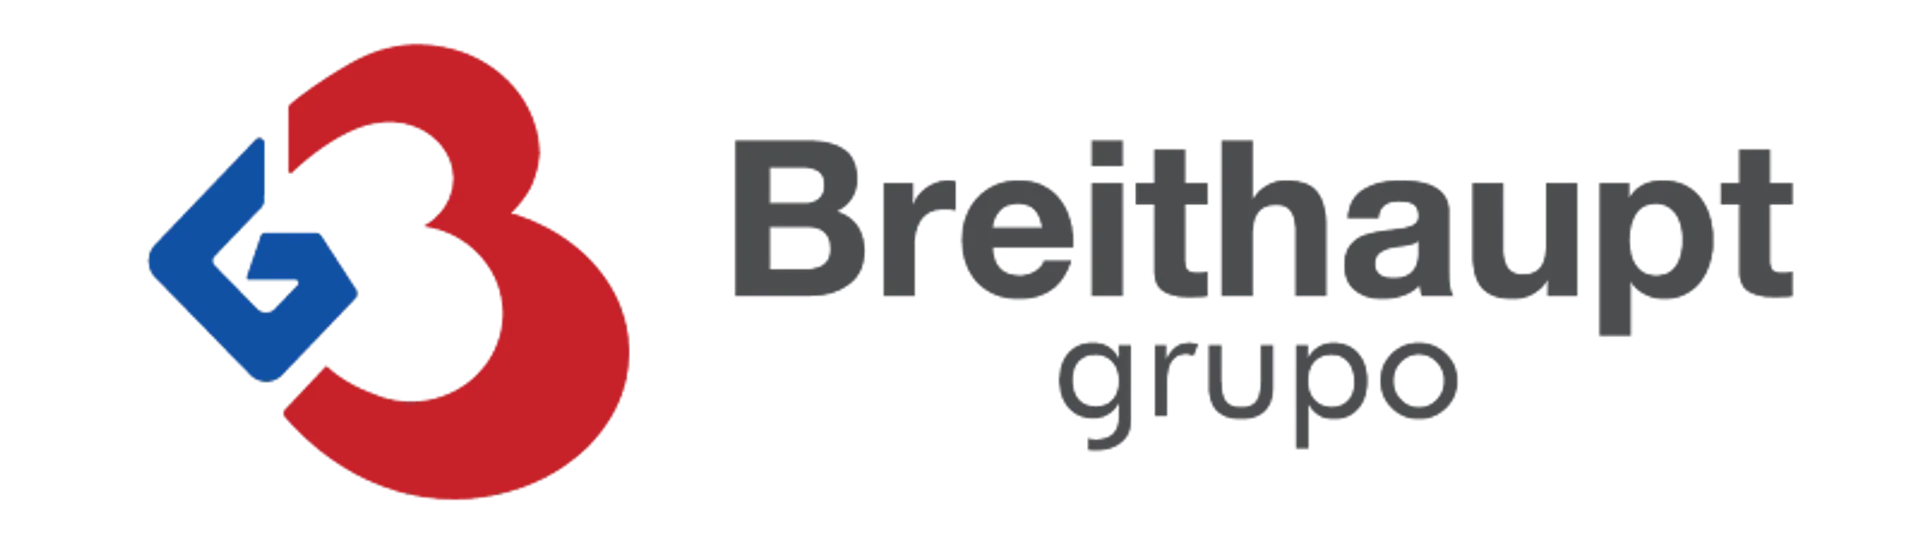 BREITHAUPT logo